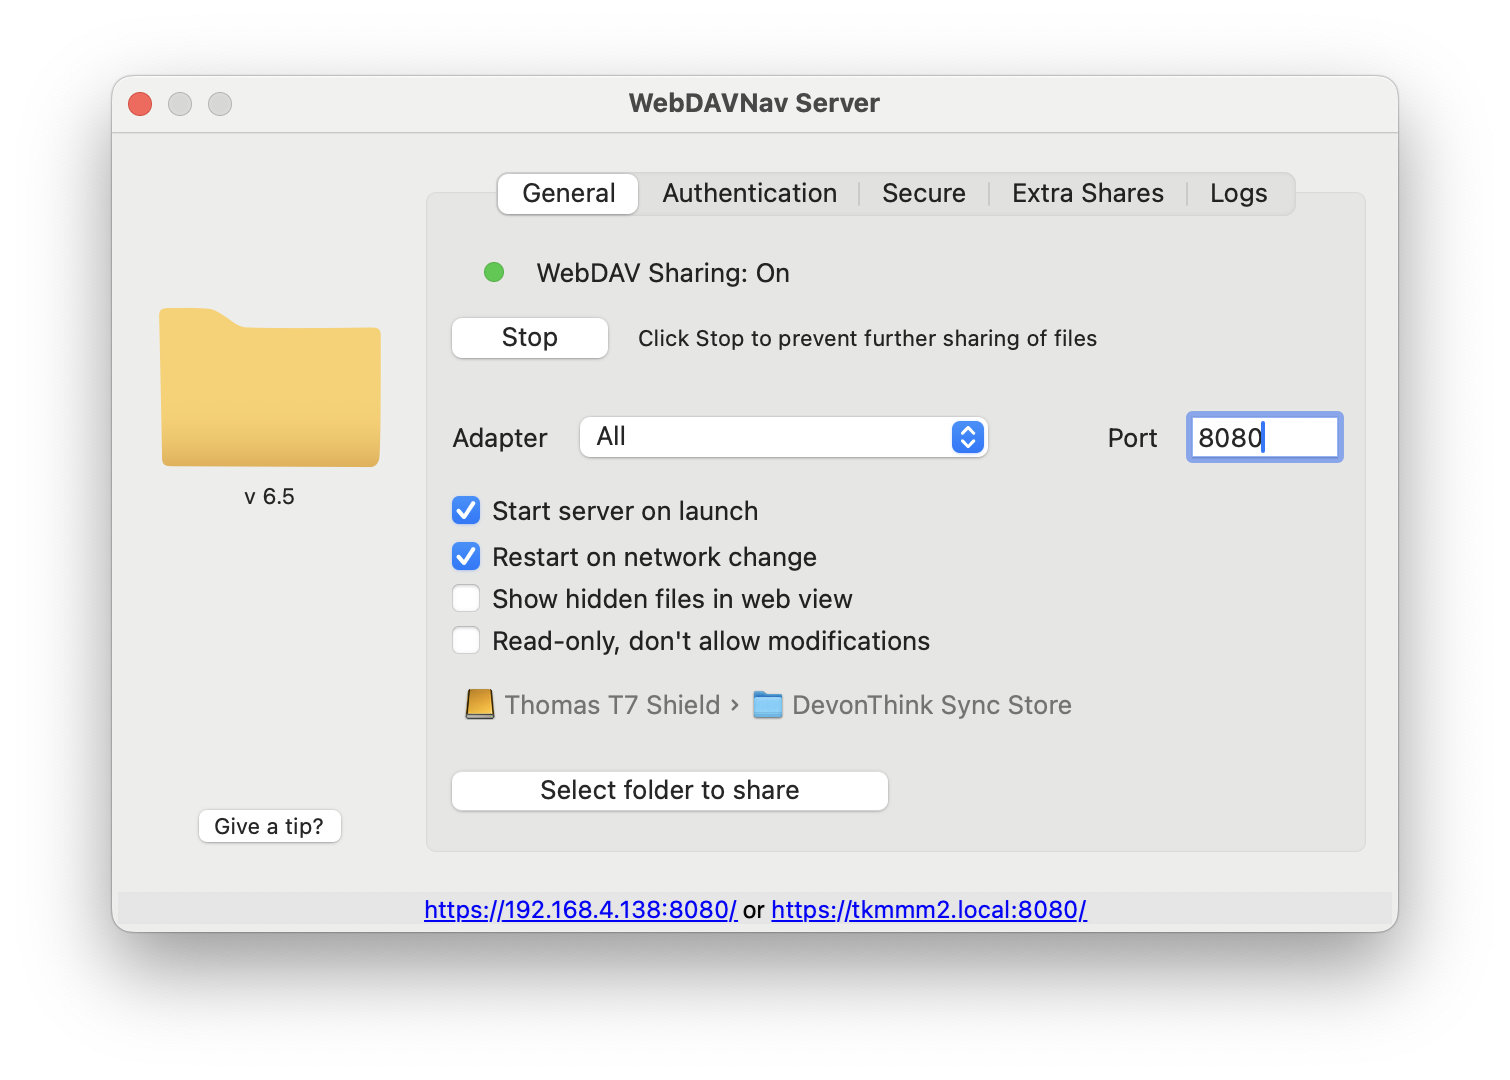 WebDAVNav Server settings: General tab